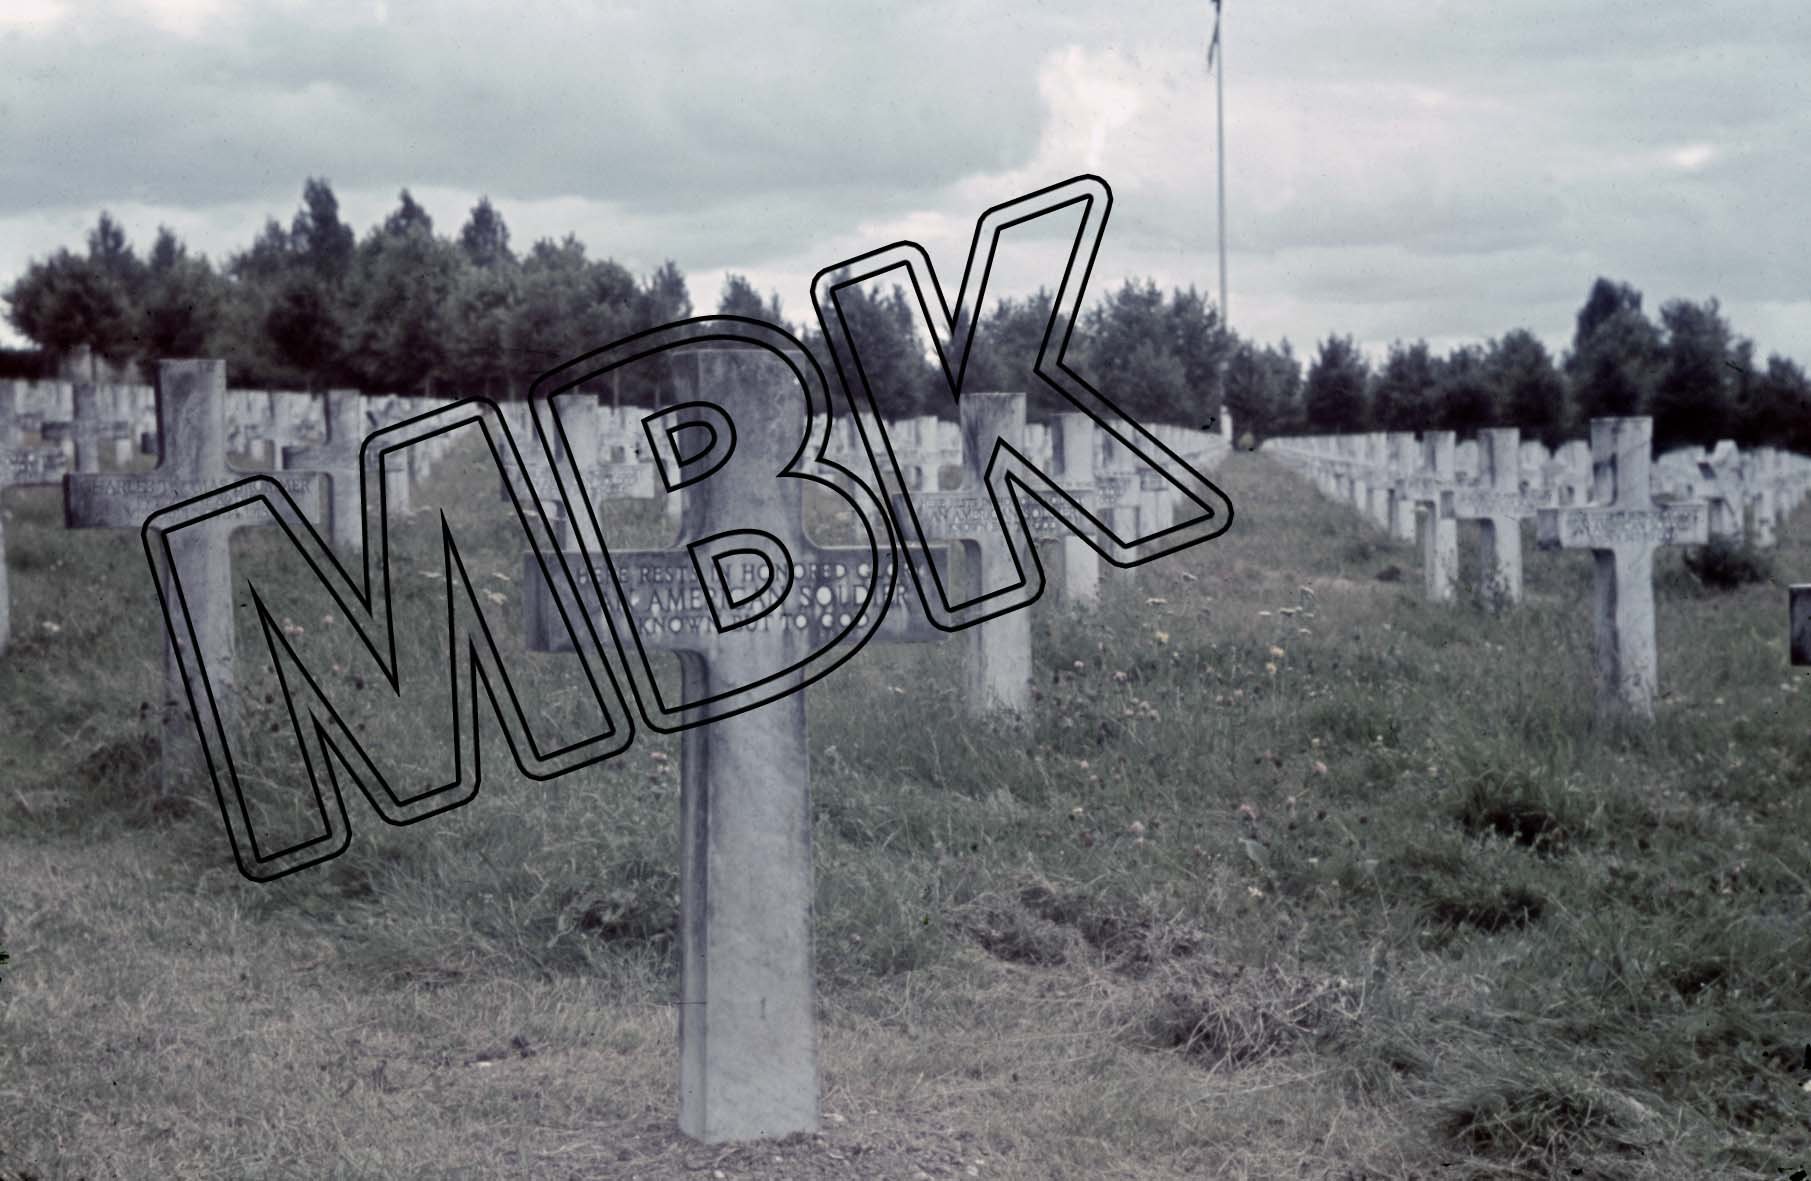 Fotografie: Amerikanischer Soldatenfriedhof bei Verdun, Frankreich, August 1940 (Museum Berlin-Karlshorst RR-P)